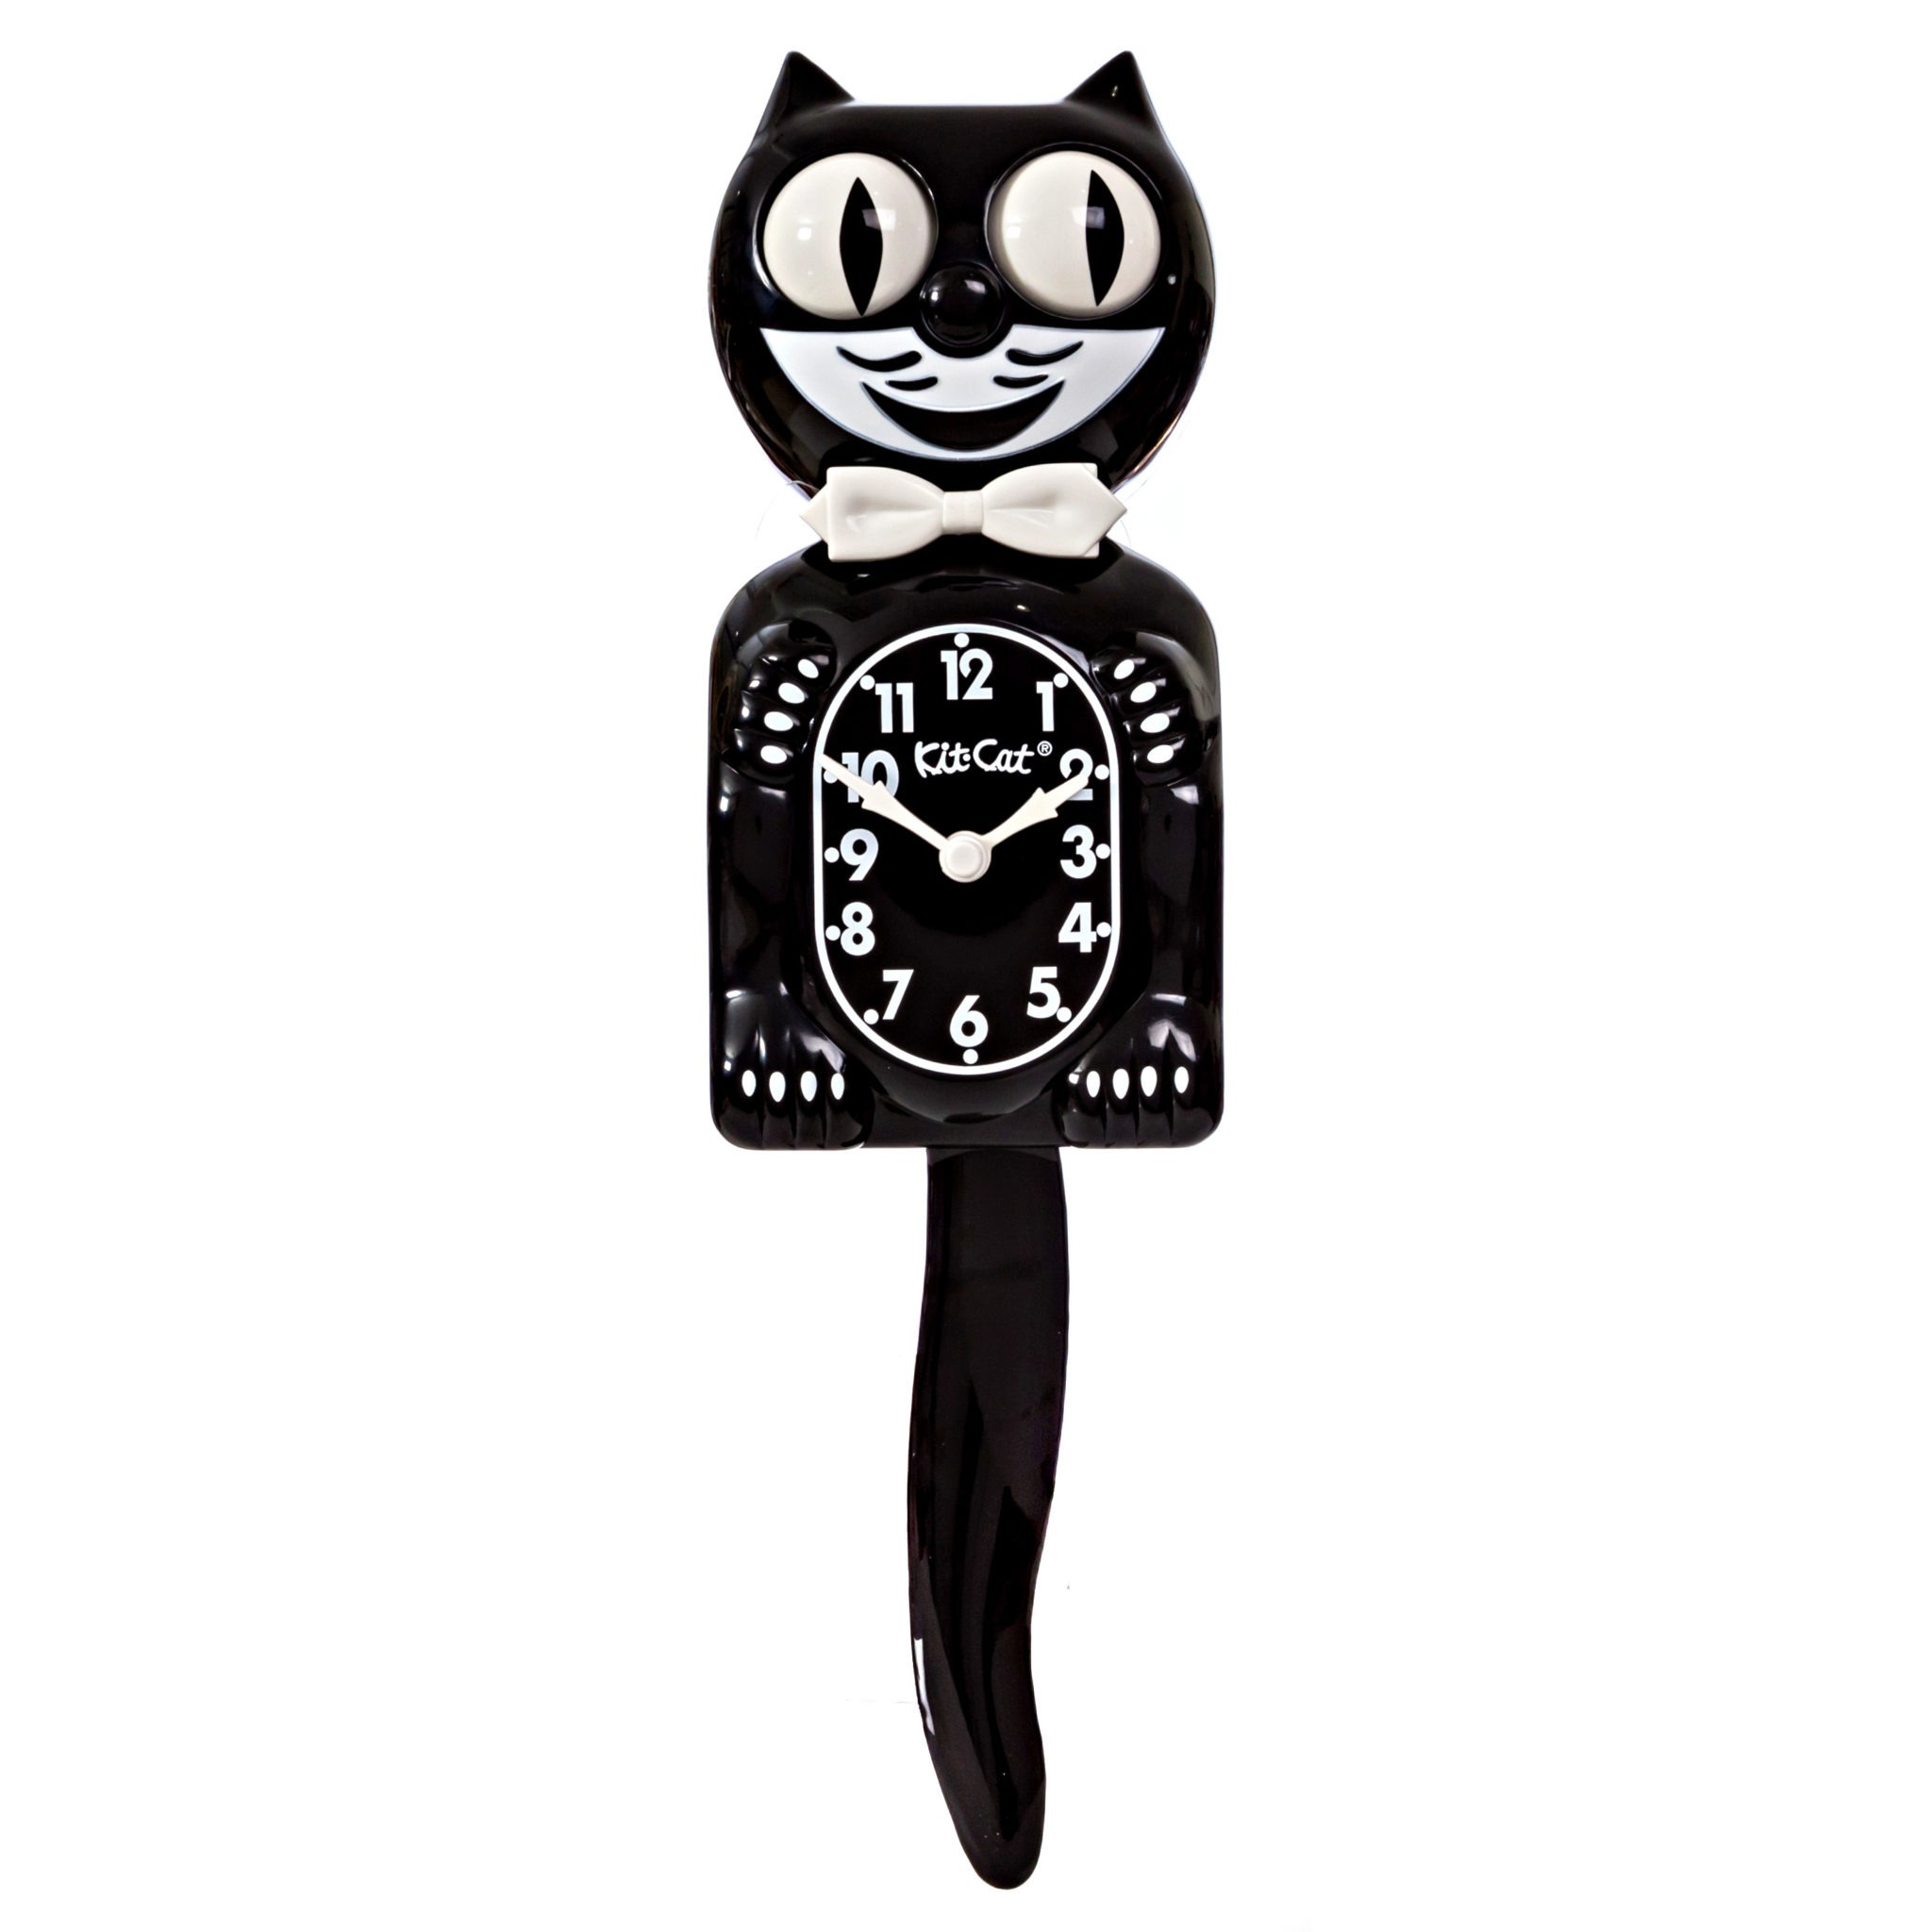 MADE IN USA Klock Free Priority Shipping! CLASSIC BLACK KIT CAT CLOCK 15.5" 